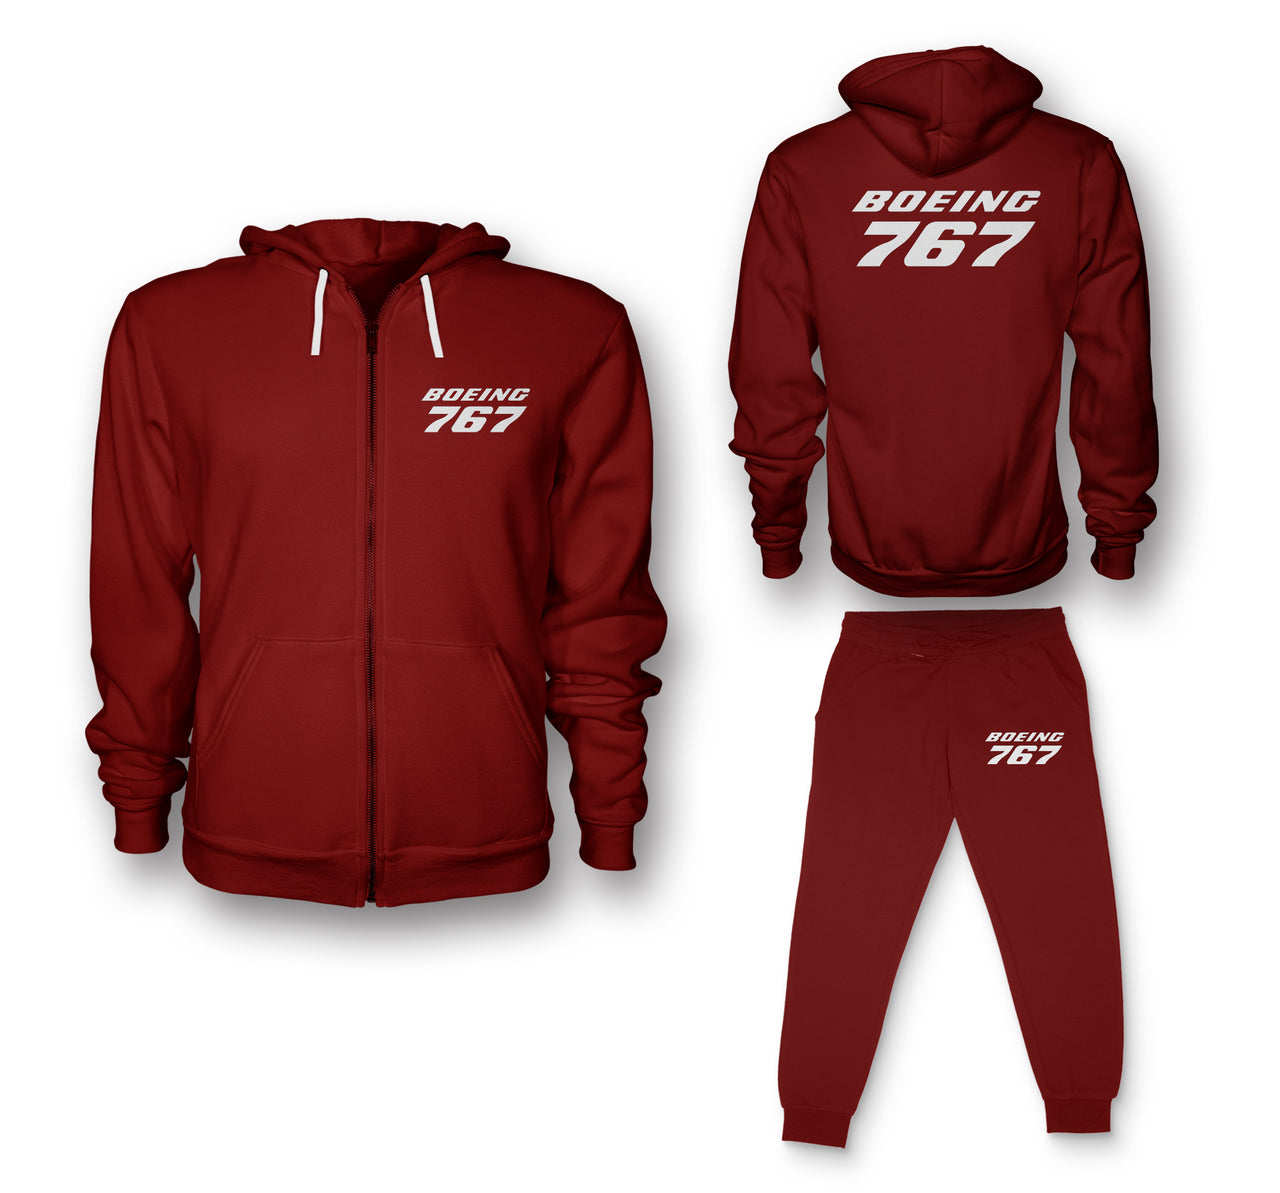 Boeing 767 & Text Designed Zipped Hoodies & Sweatpants Set